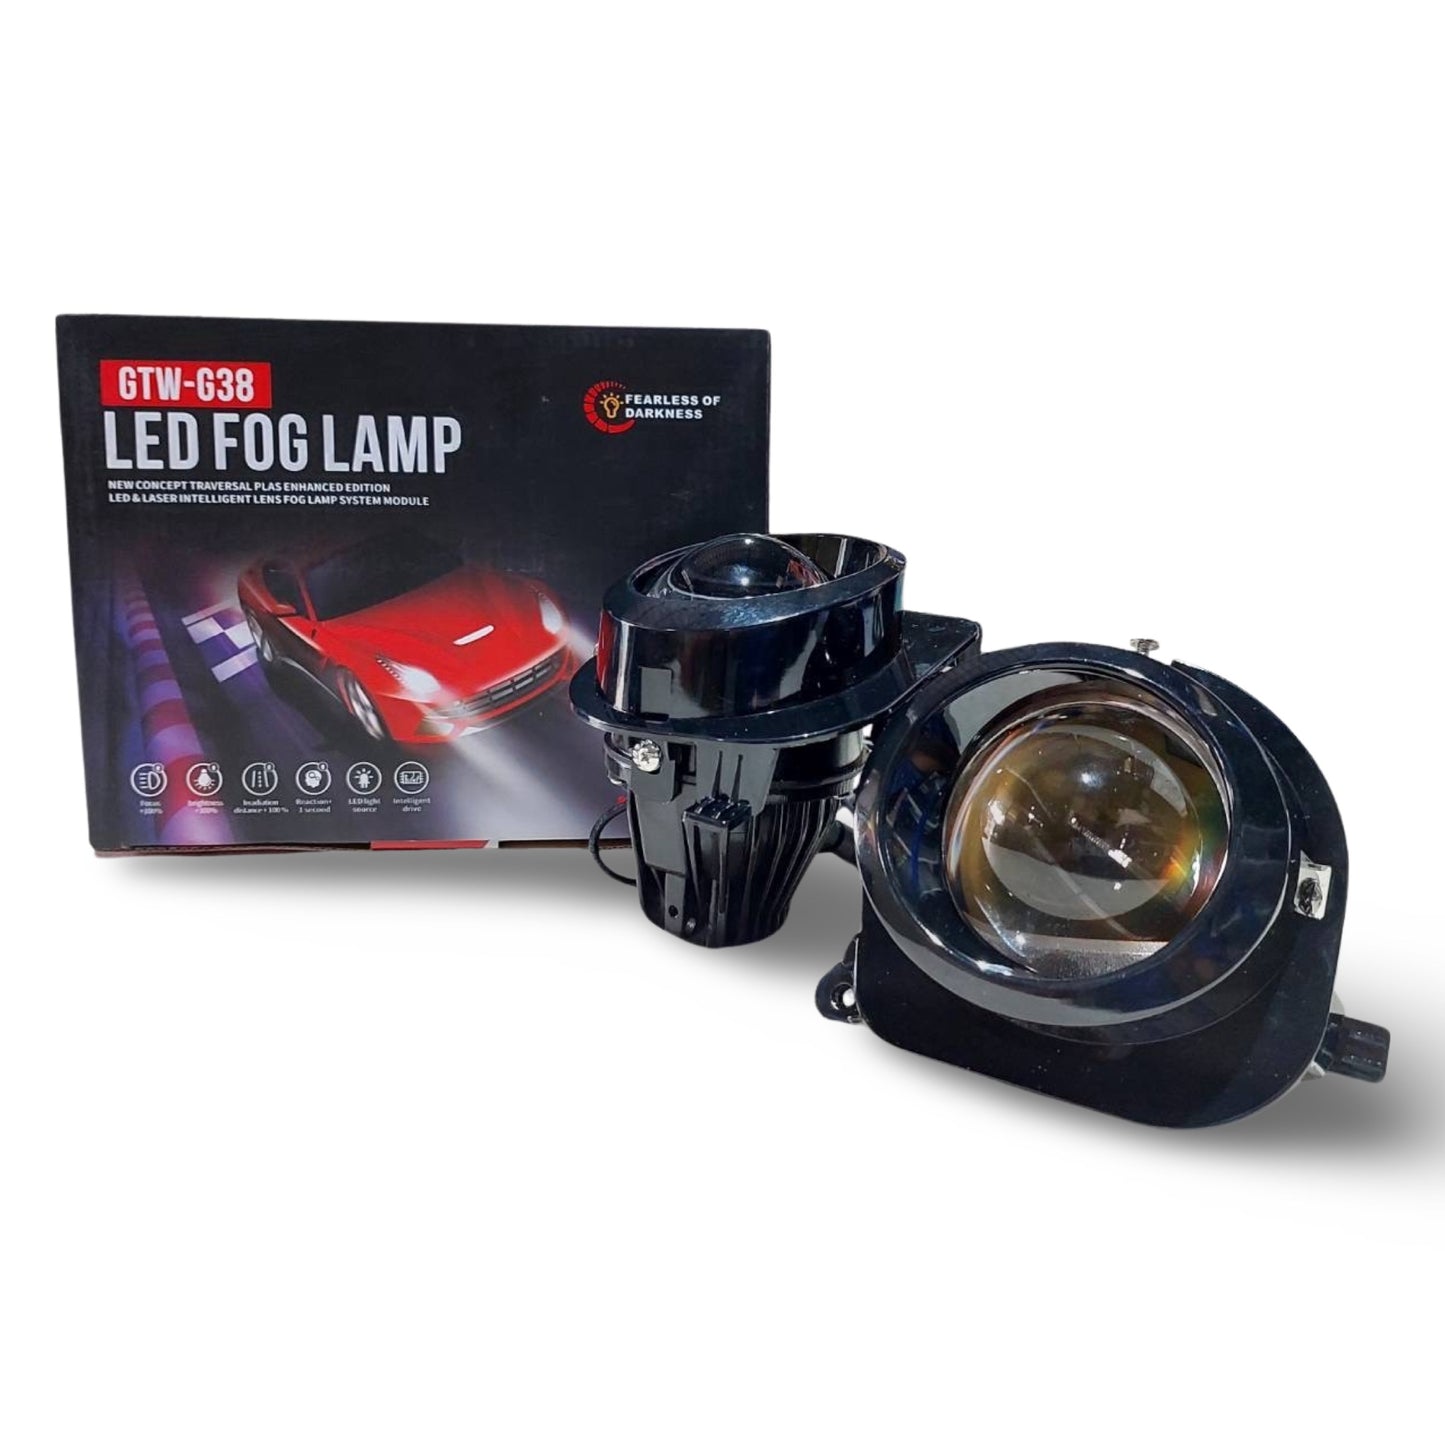 LED Projector Foglamp For BMW Series 5 X3, X4, X5, X6 6000K ไฟตัดหมอก LED Projector สำหรับ  BMW X3, X4, X5, X6